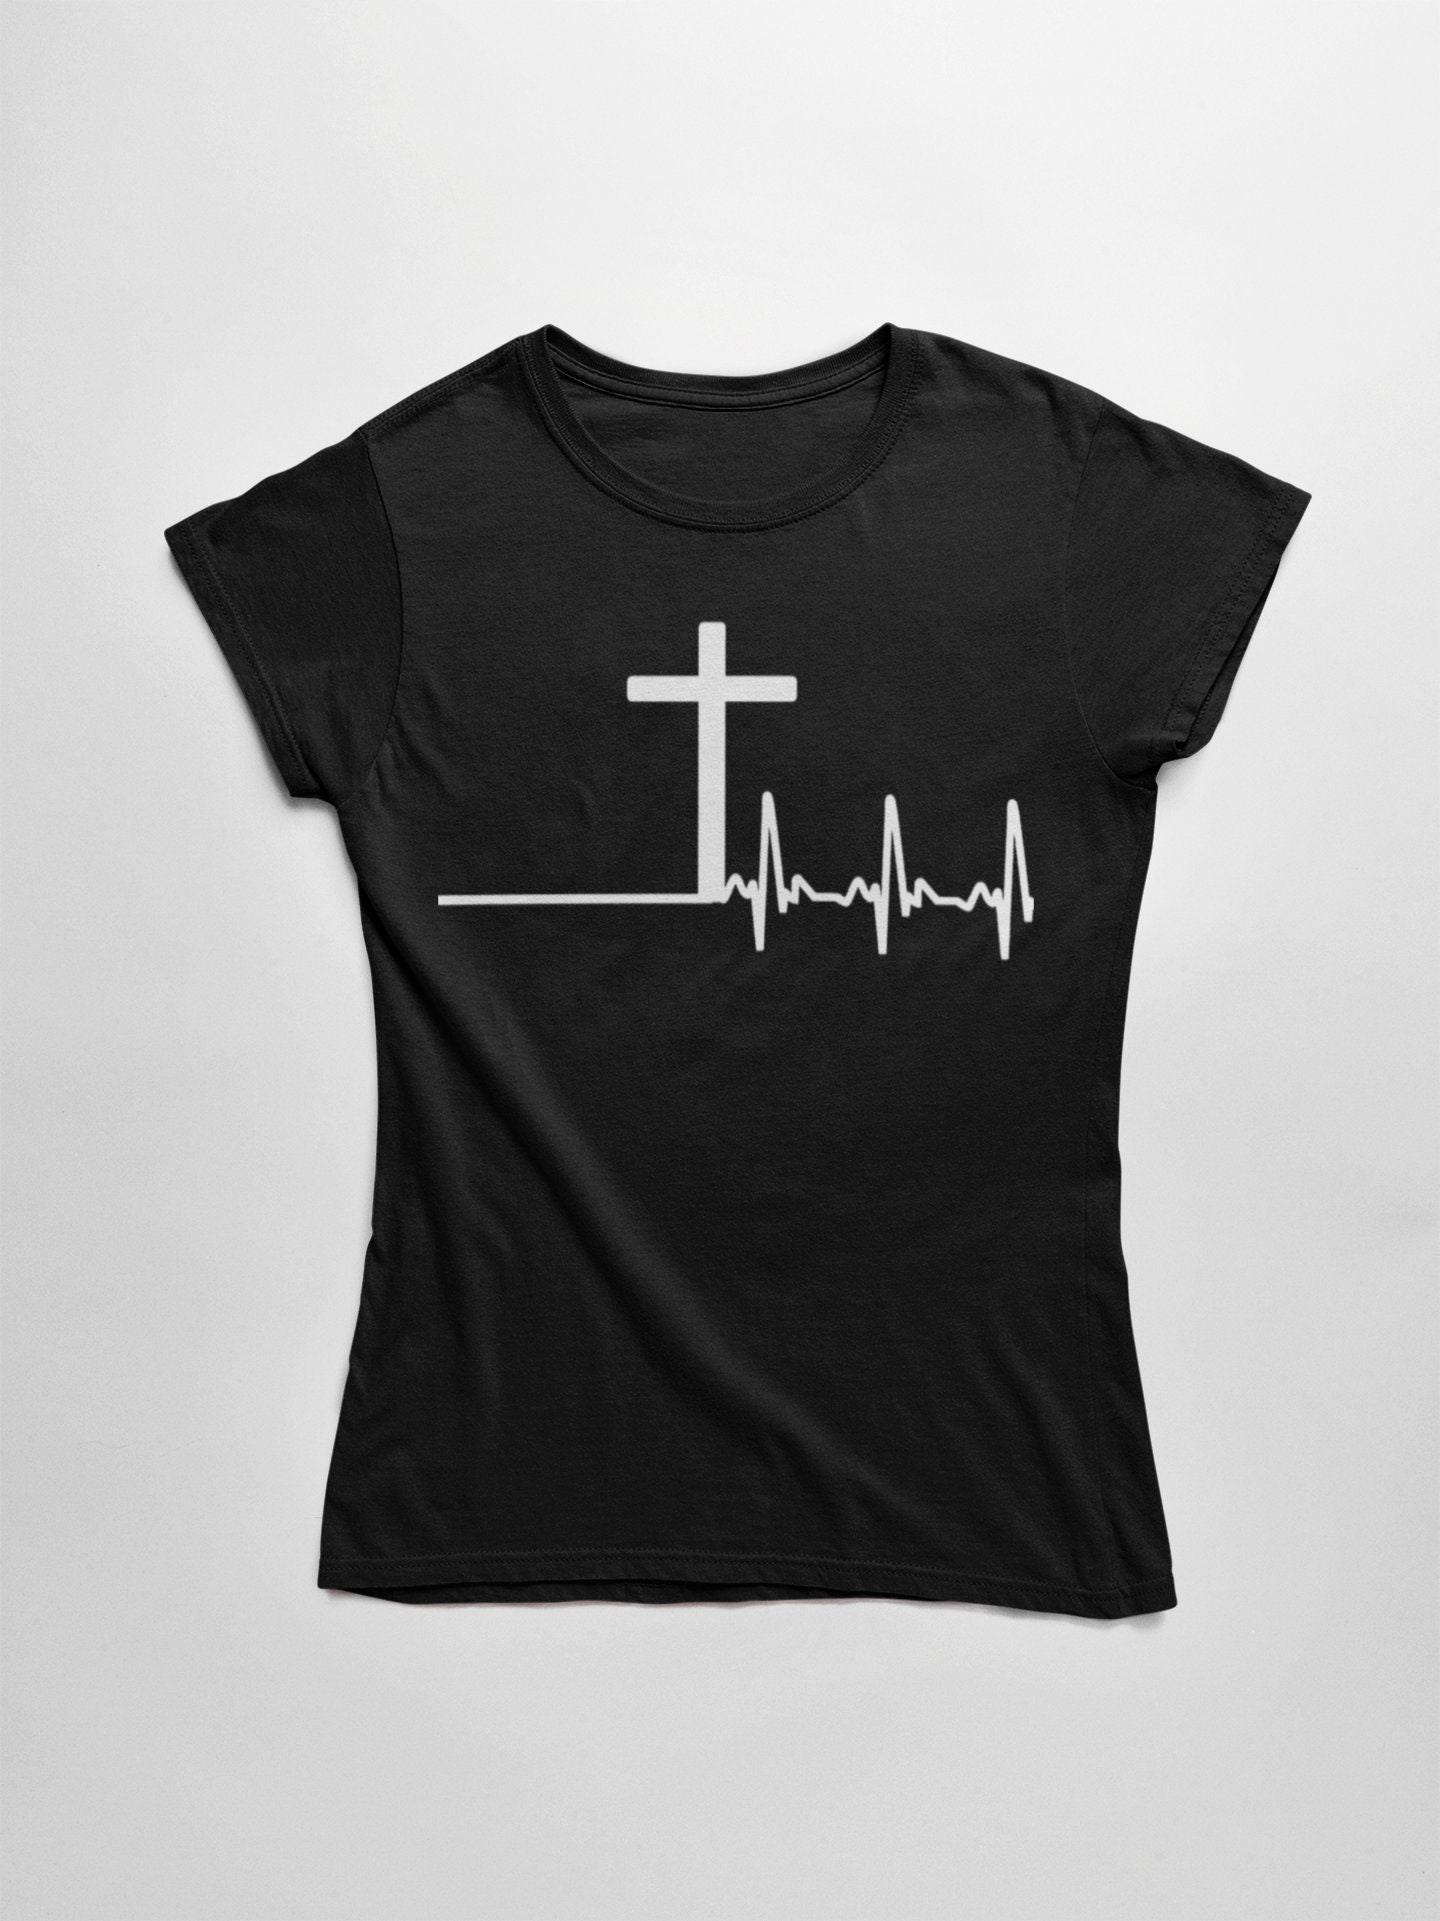 Heart Beat After The Cross T-Shirt | Etsy